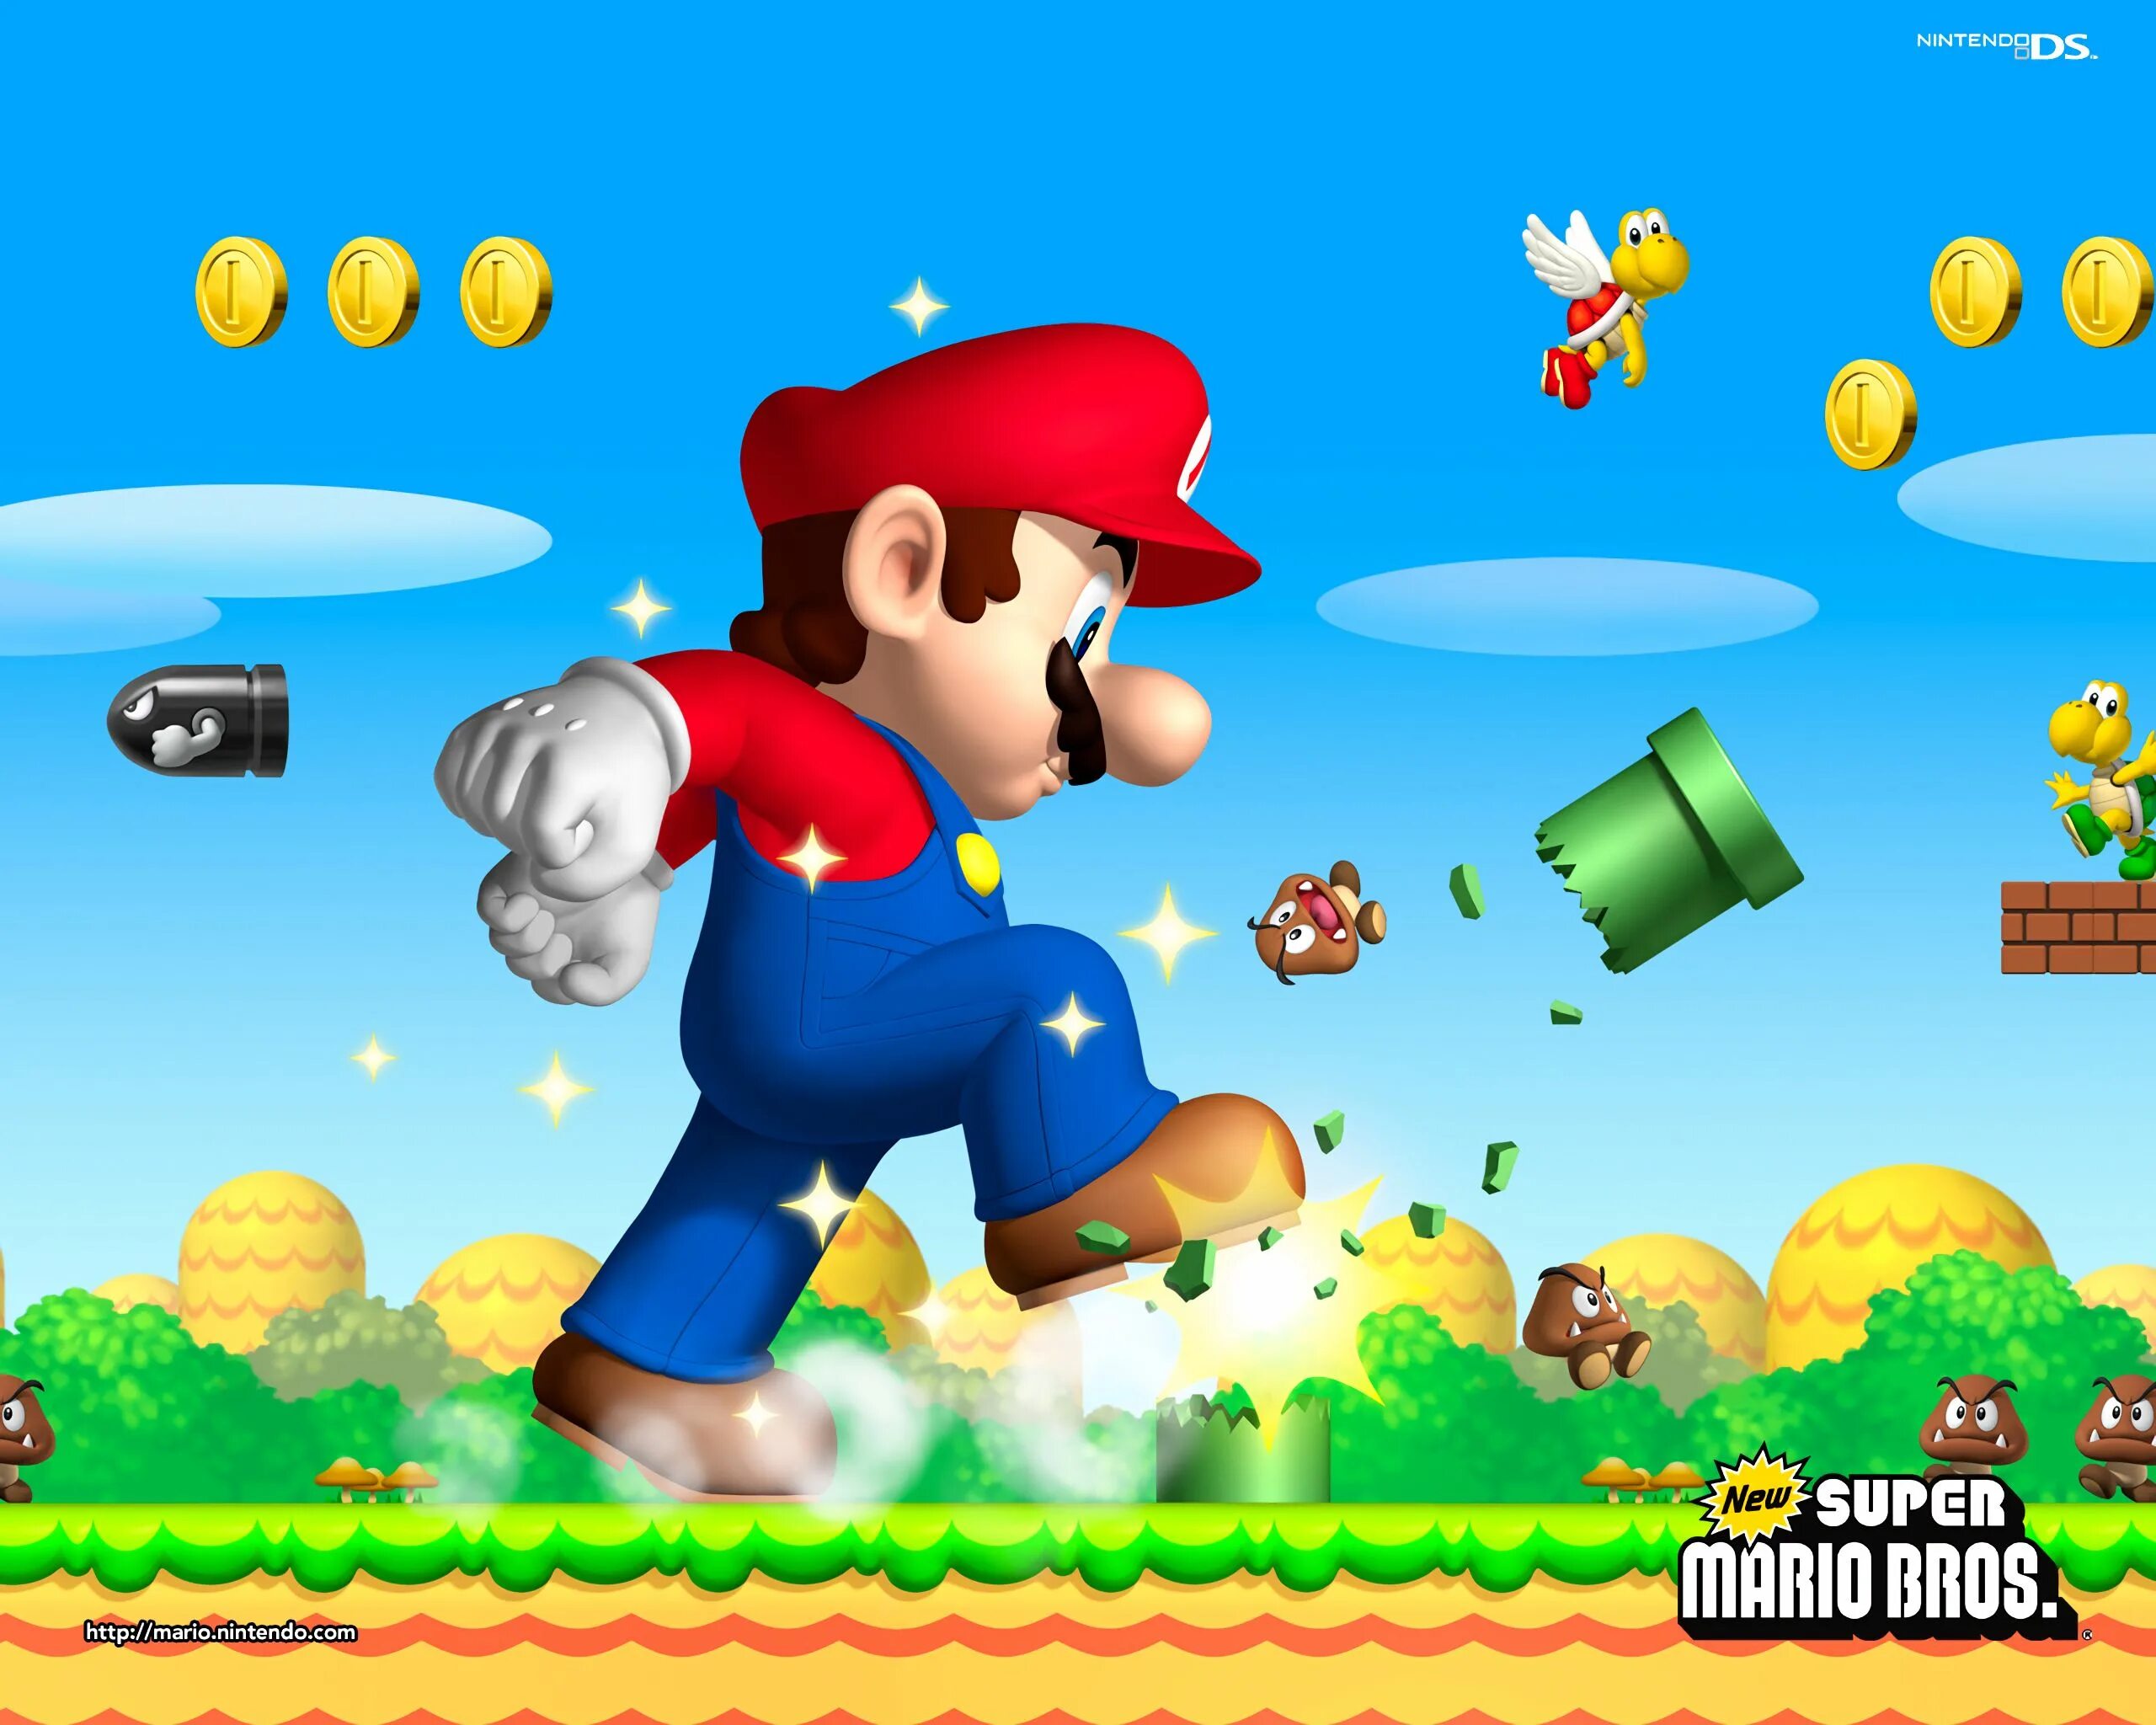 Mario wanna. New super Mario Bros. Игра. Игра Марио супер Марио БРОС. Супер Марио БРОС Нинтендо. Игра super Mario Bros 3.